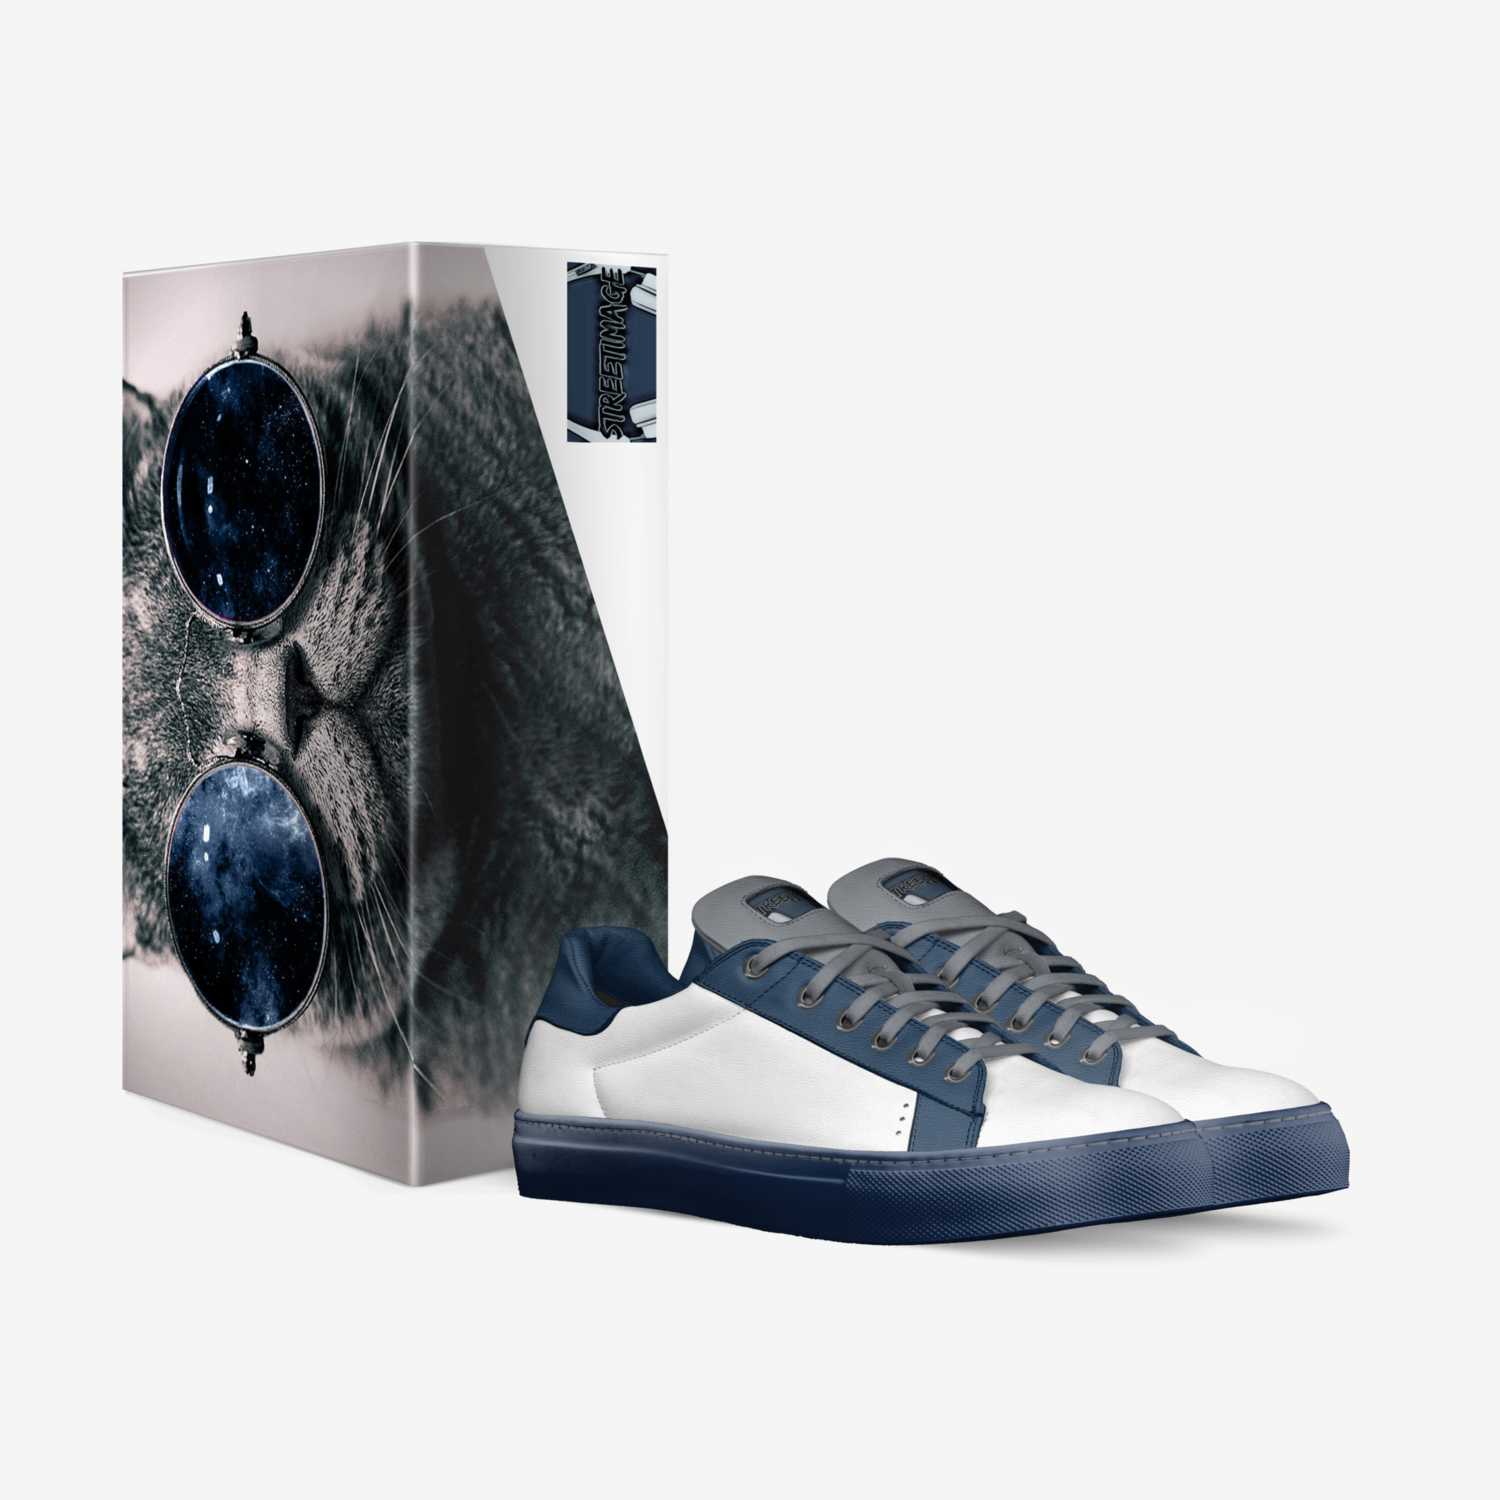 Posh Blues custom made in Italy shoes by Pasqualino Speranza | Box view